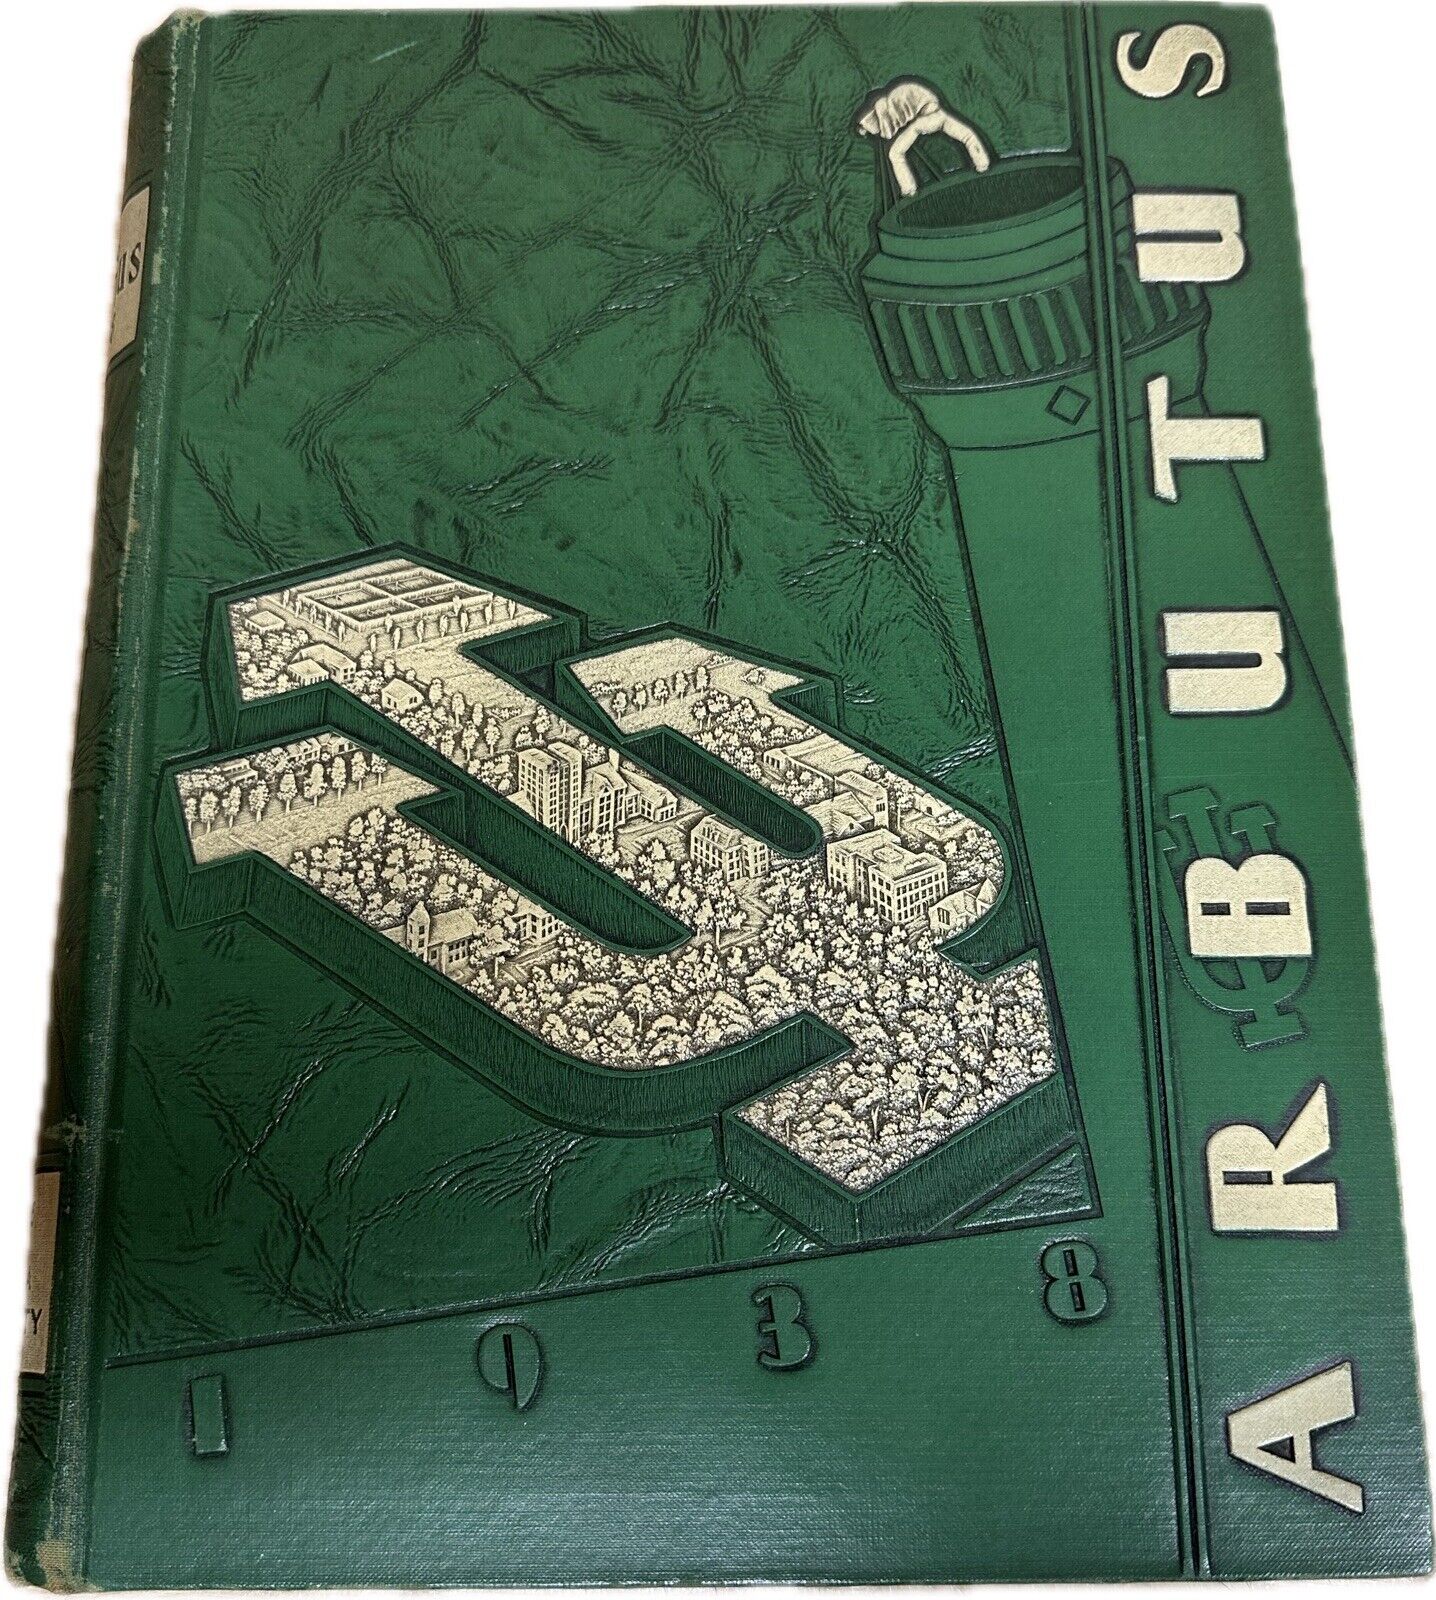 IU Arbutus. 1938 Indiana University Yearbook Vol. 45